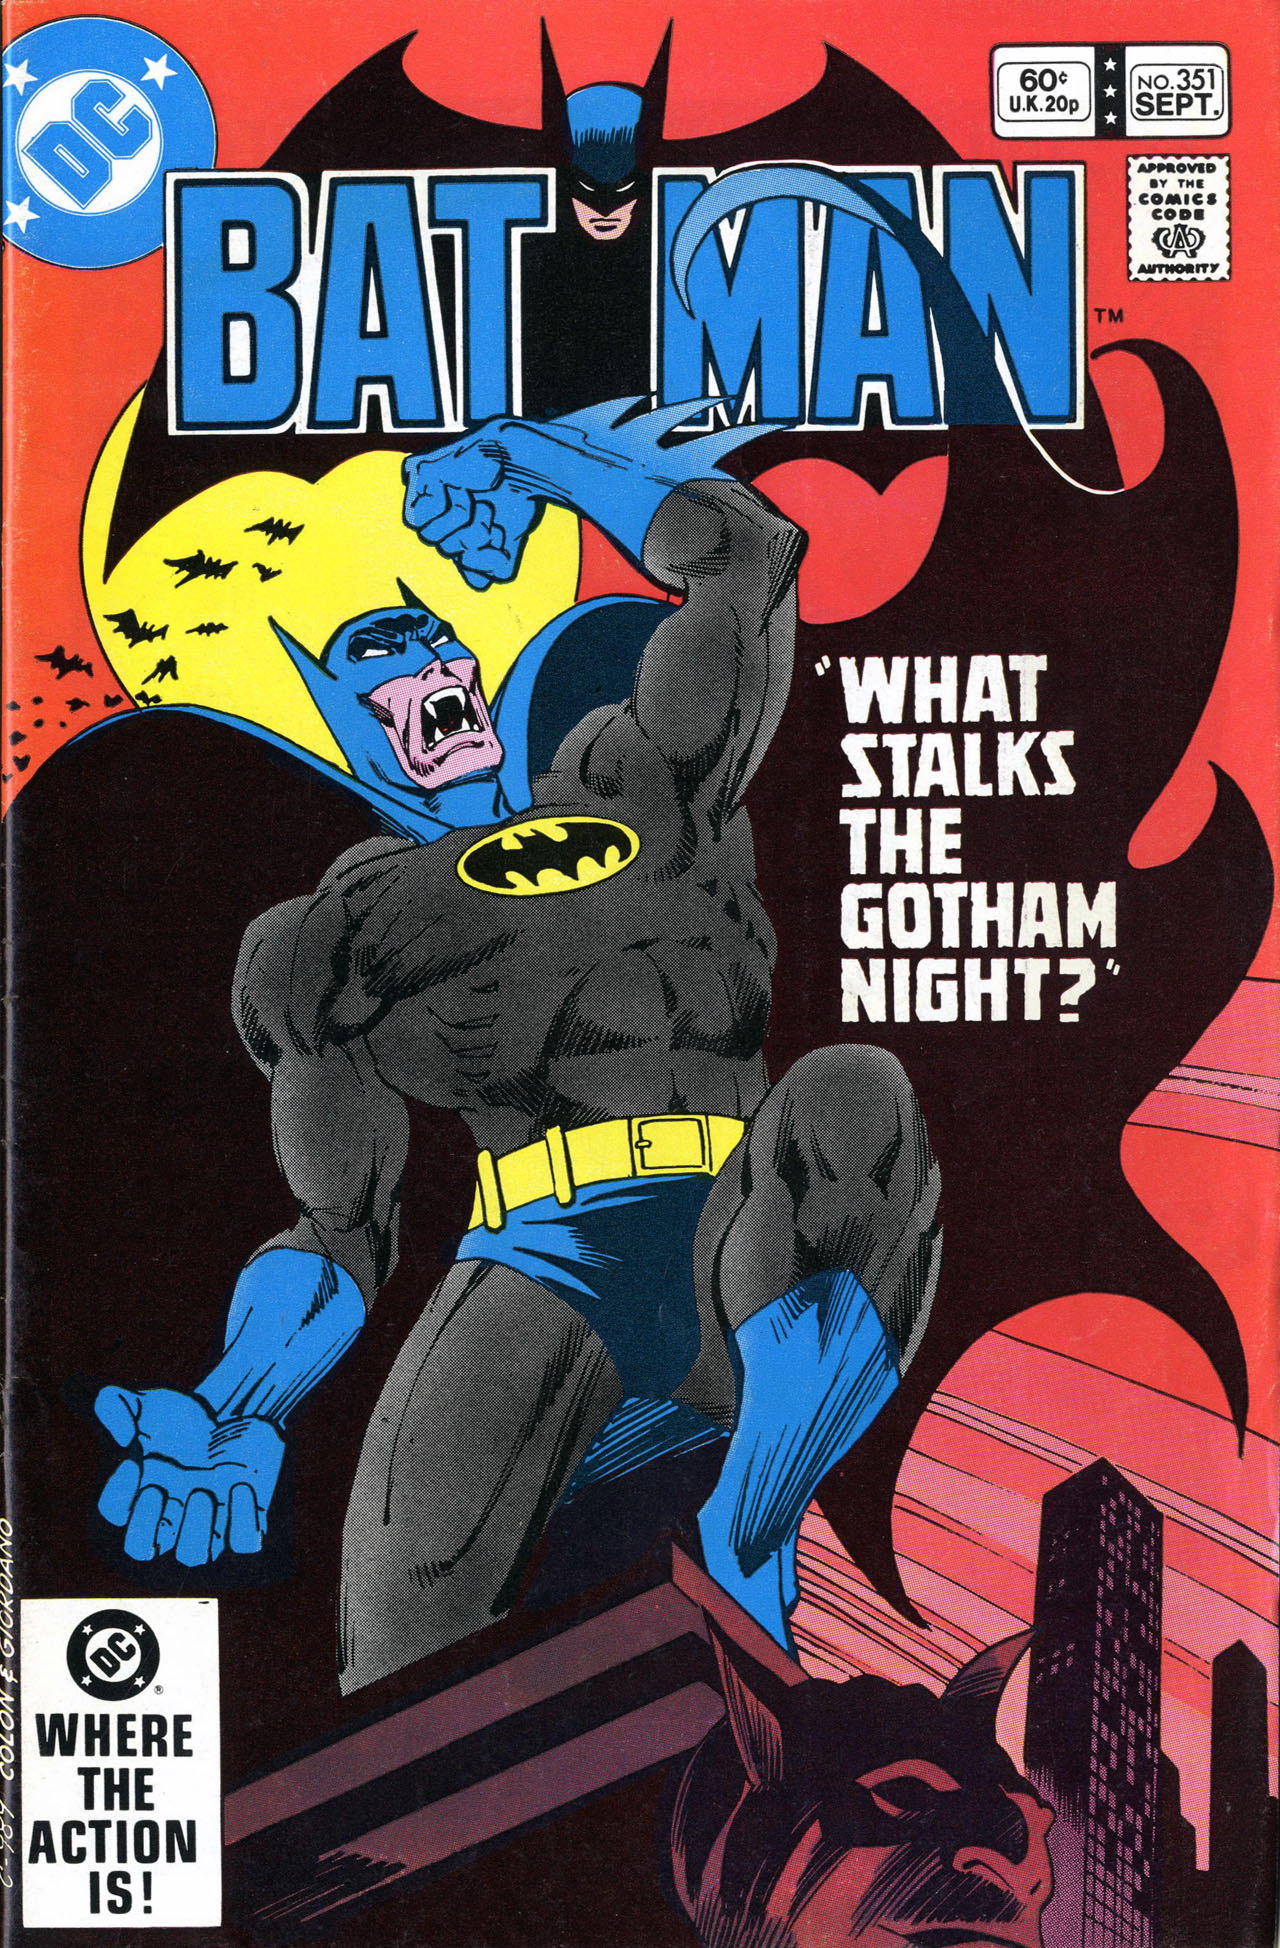 BATMAN #351 DC COMICS DARK KNIGHT NICE CONDITION SEPTEMBER 1982 